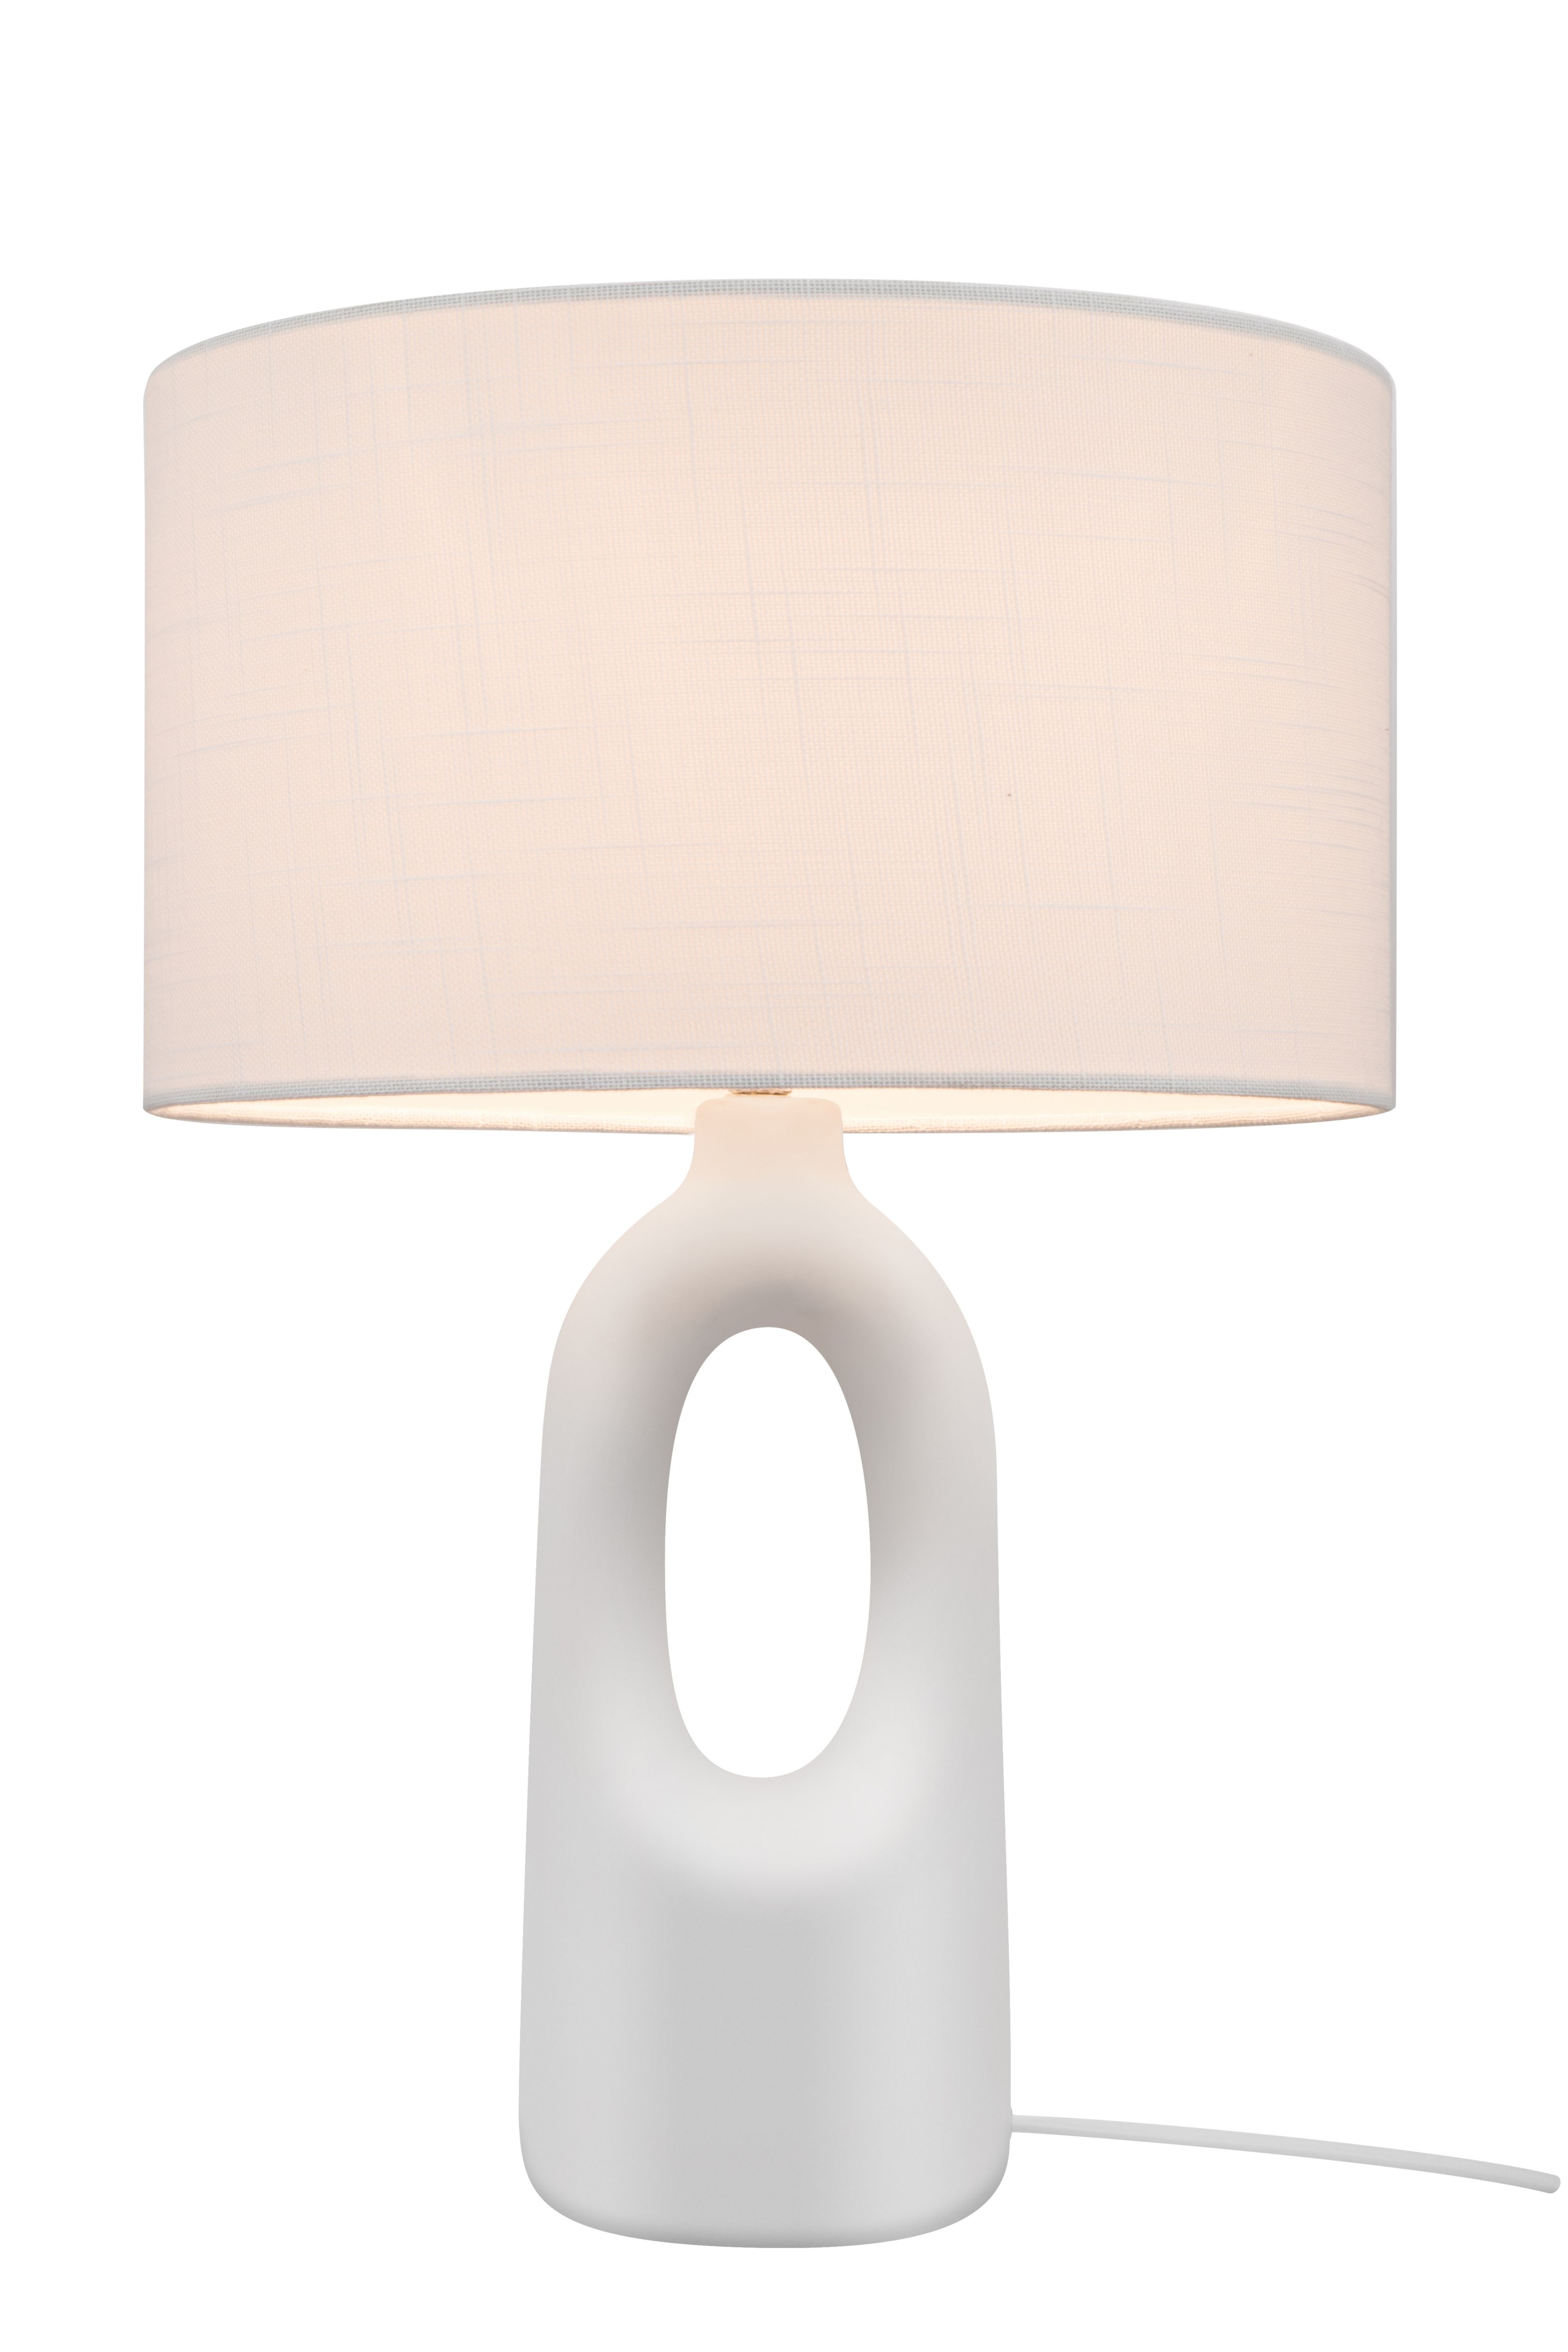 GoodHome Horley Cream Straight Table lamp